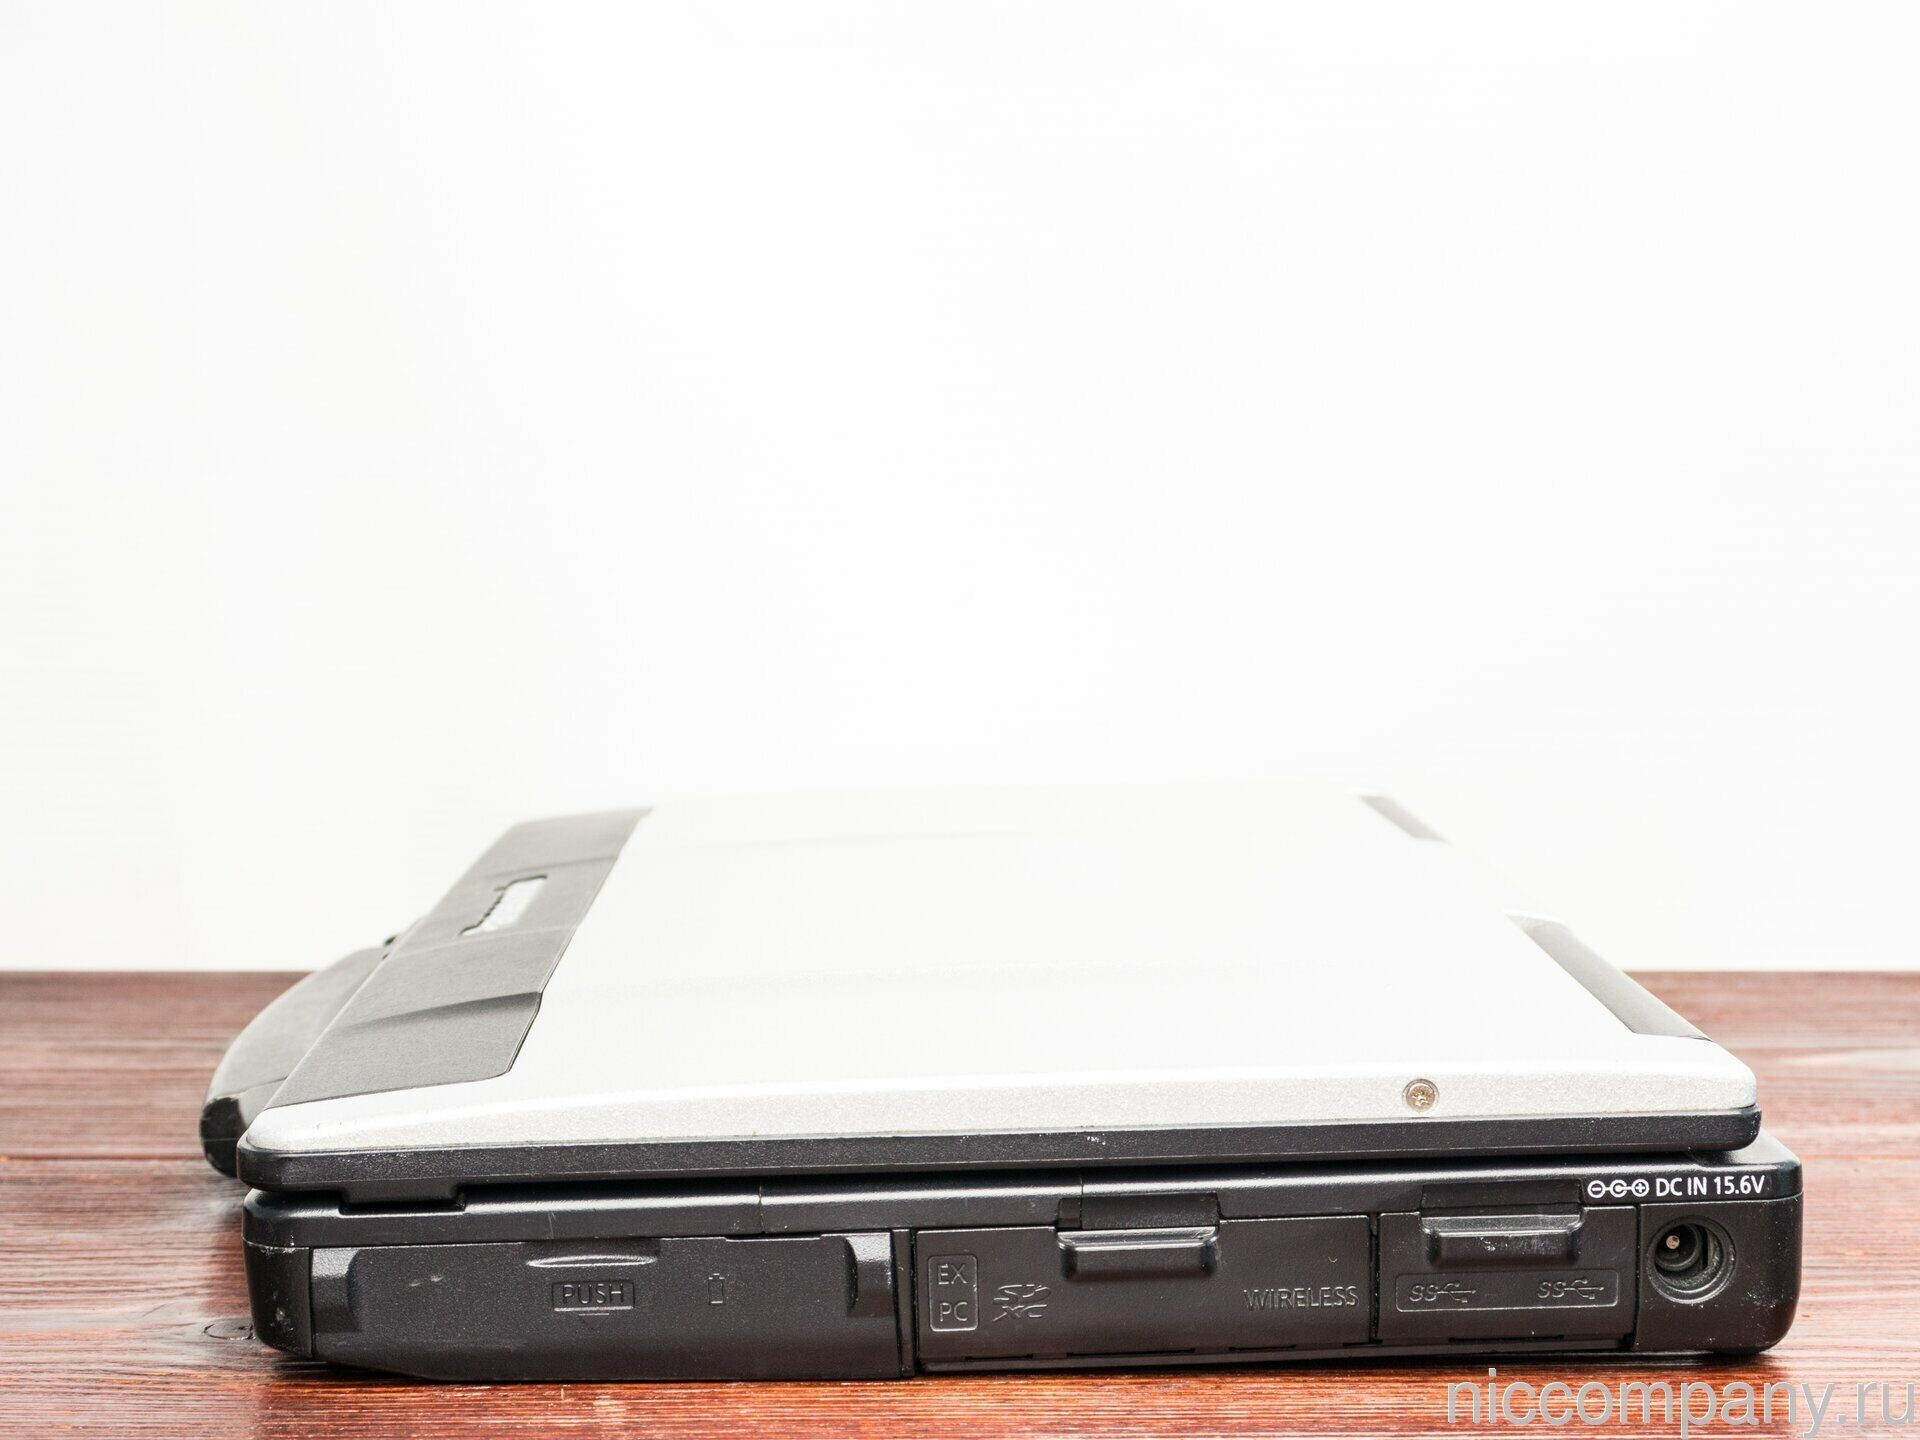 Ноутбук Panasonic Toughbook Cf-53 Mk1